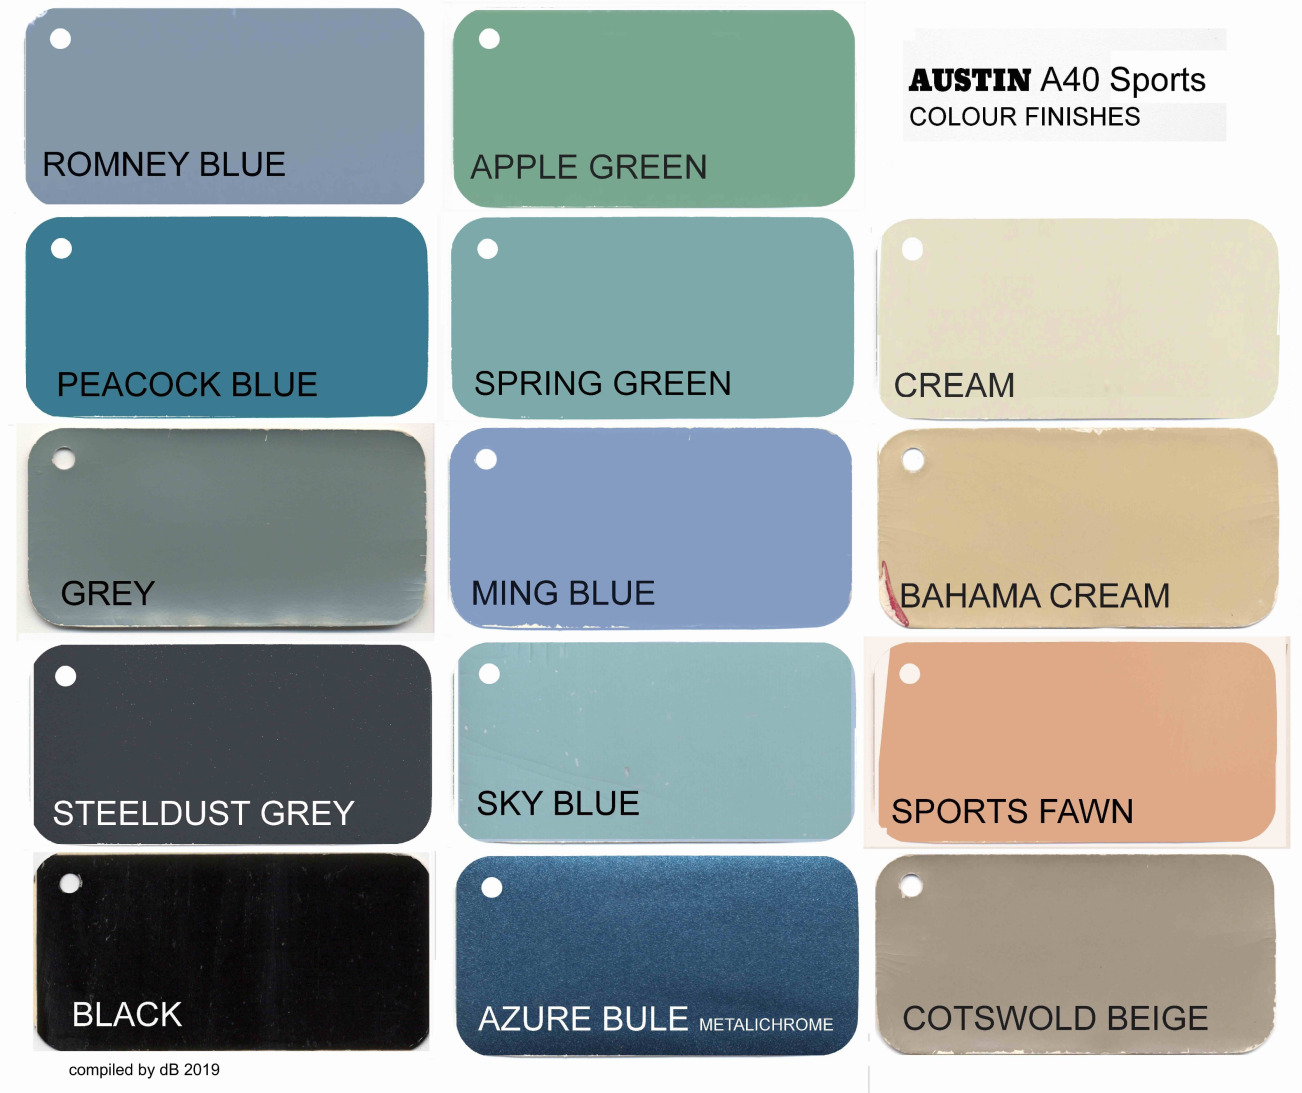 Austin A40 Sports colours